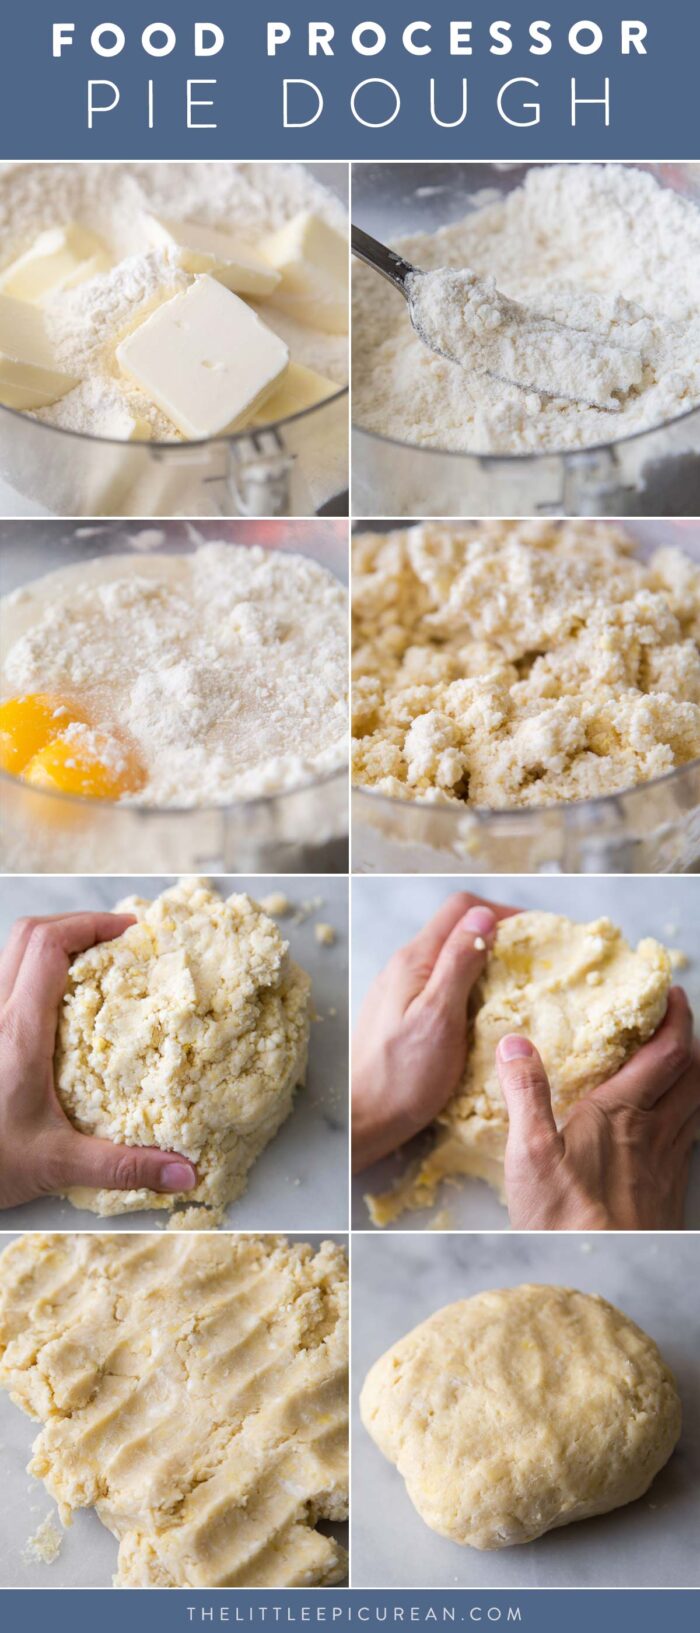 step by step how to make pie dough using food processor.